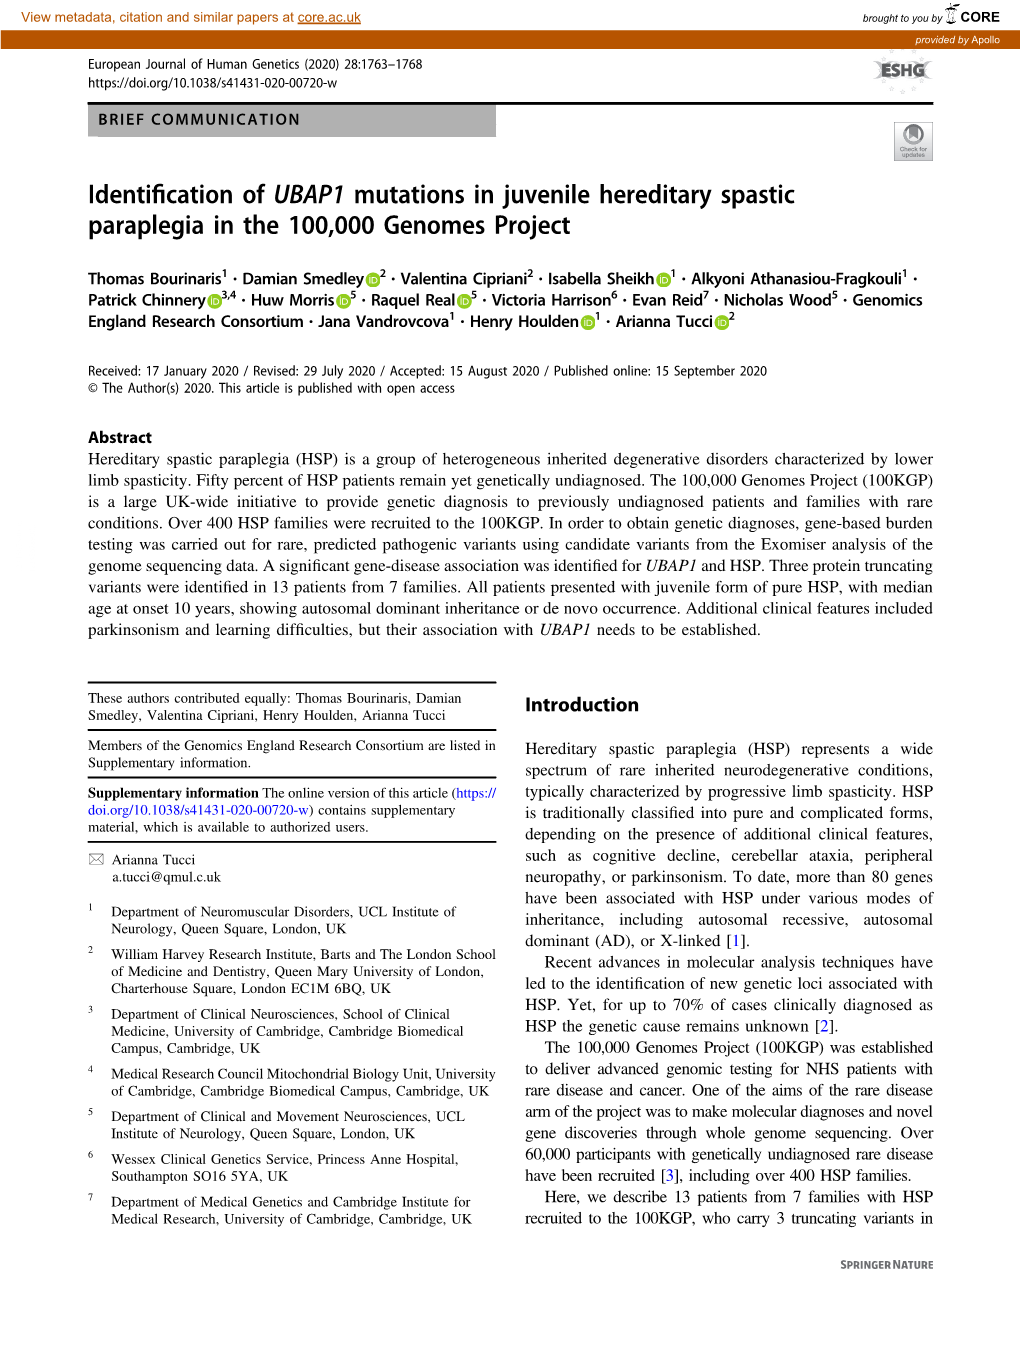 Identification of UBAP1 Mutations in Juvenile Hereditary Spastic